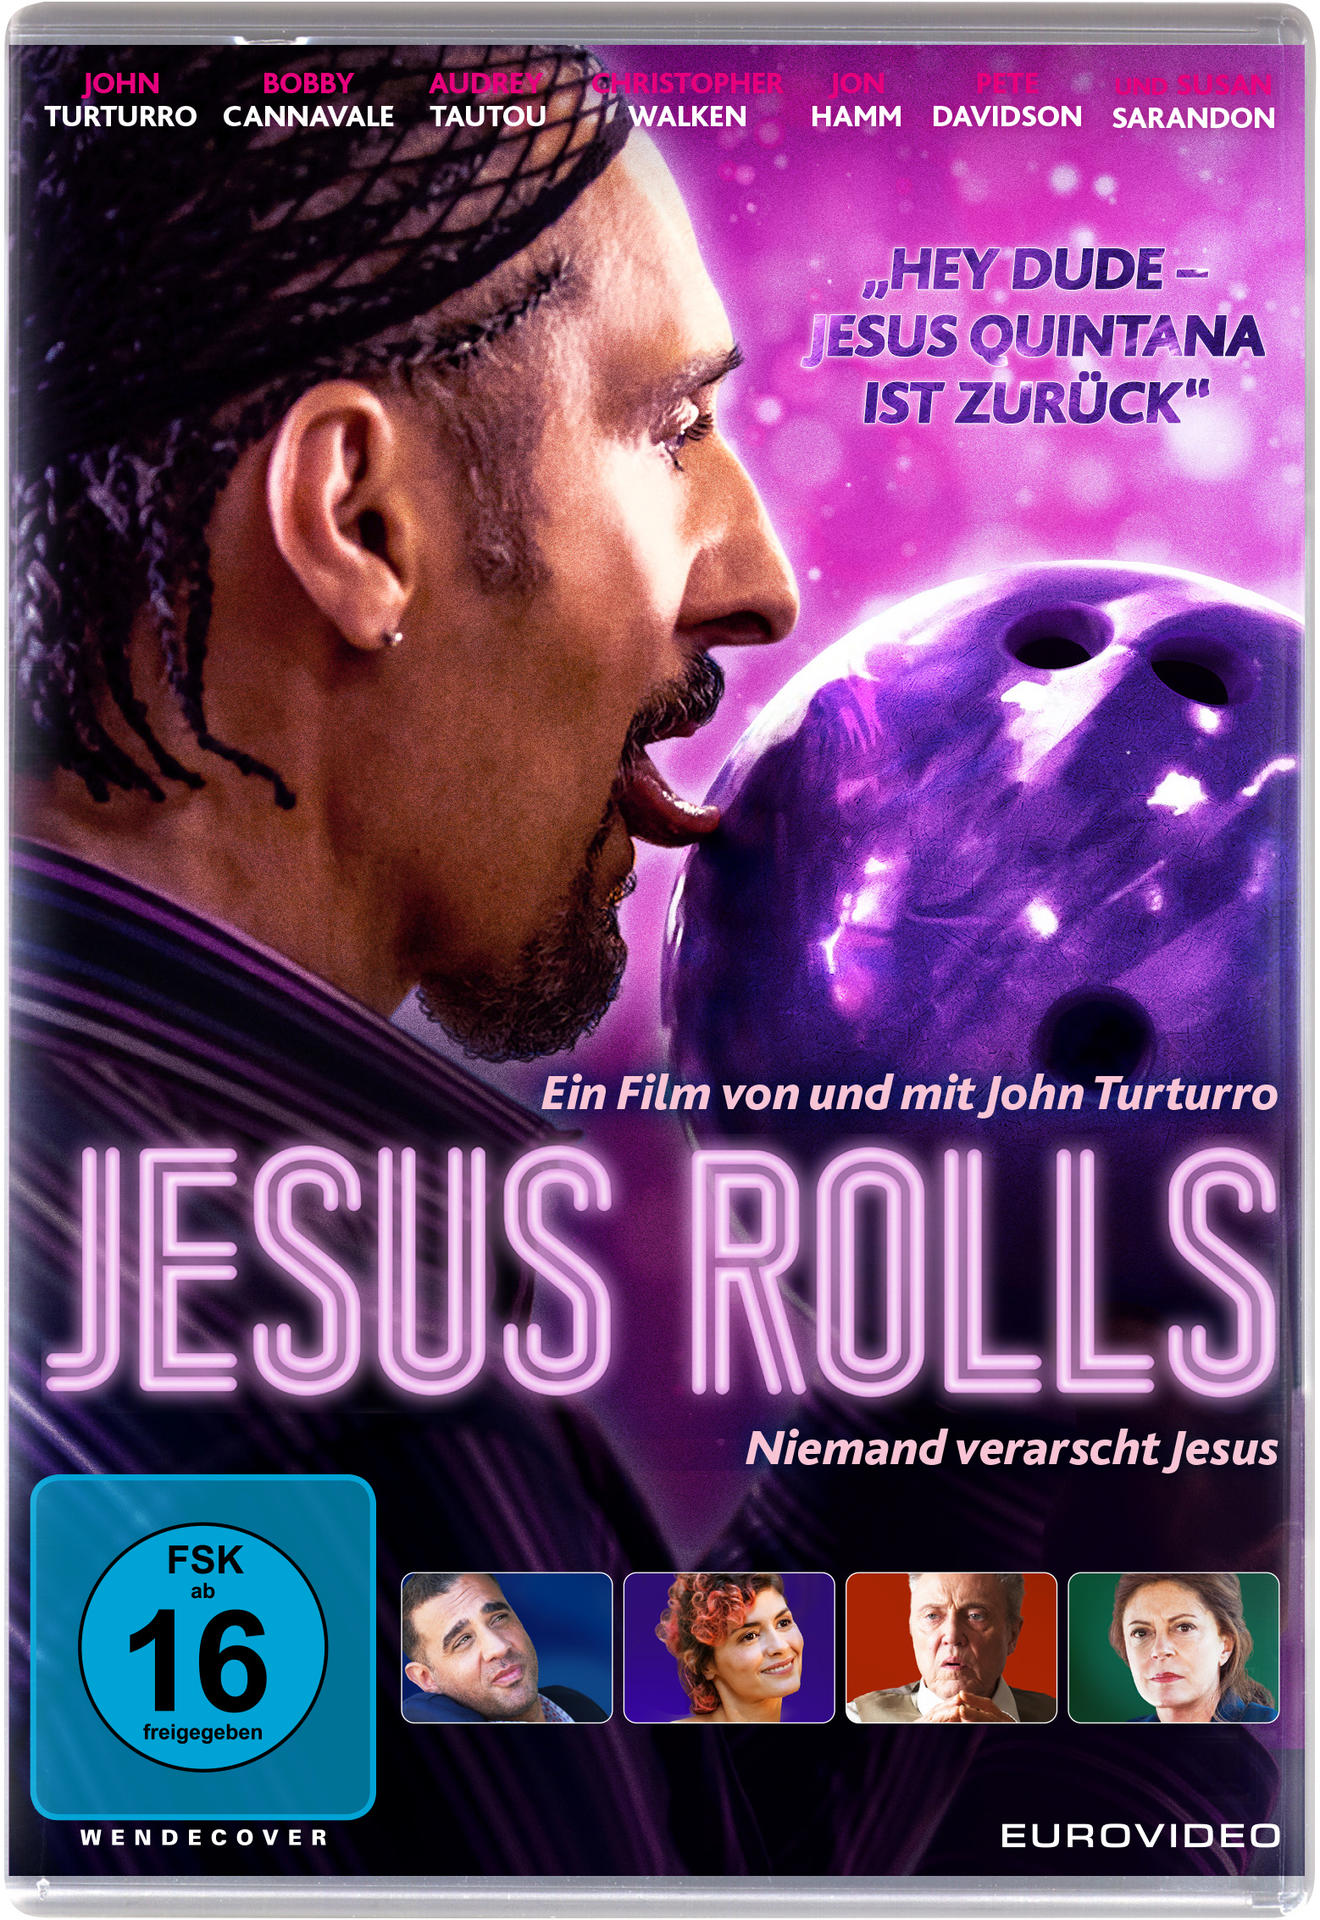 Jesus DVD Rolls